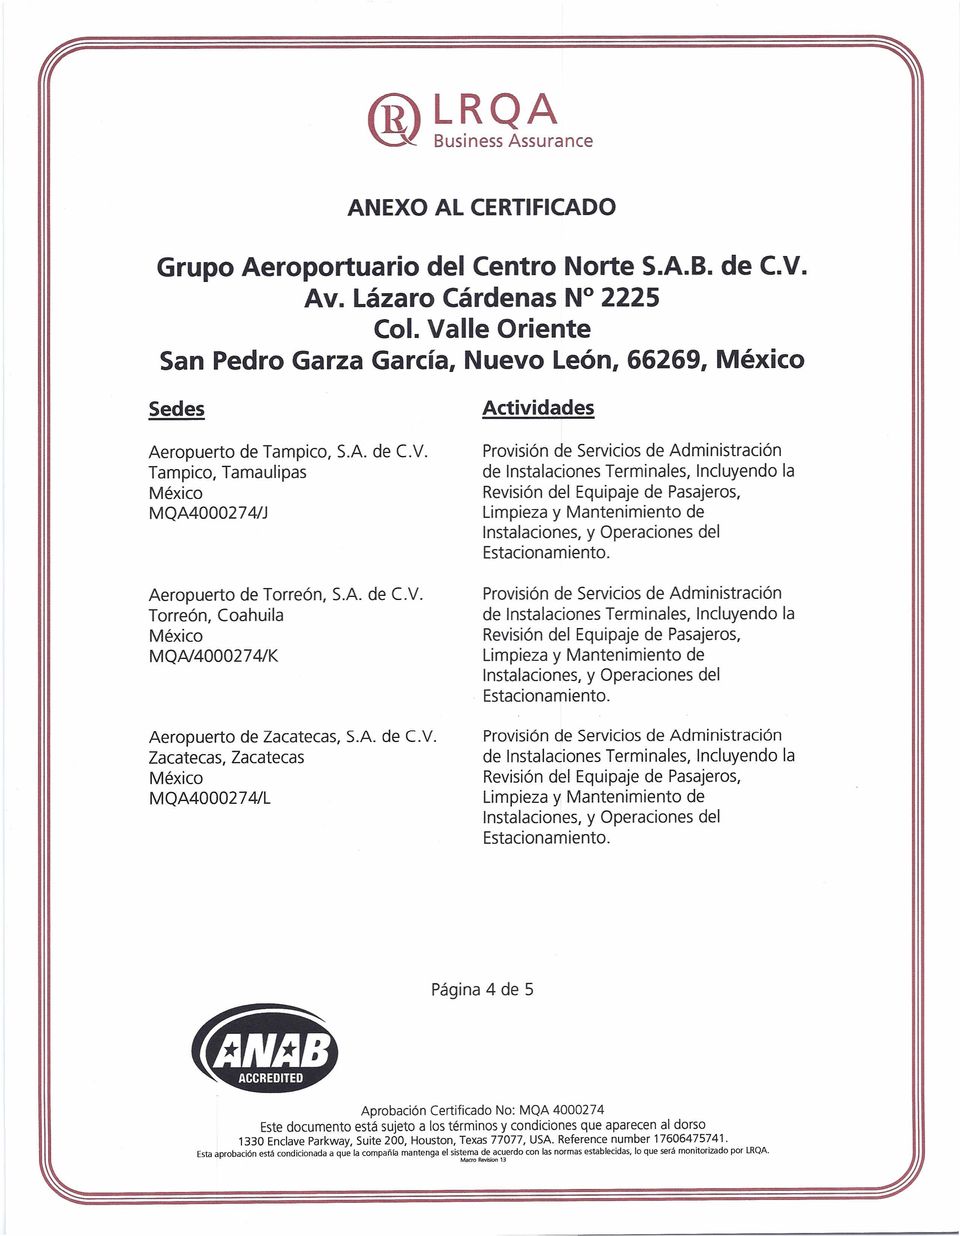 Zacatecas, Zacatecas MQA4000274/L Provision de Servicios de Adrninistracion Provision de Servicios de Administracion Provision de Servicios de